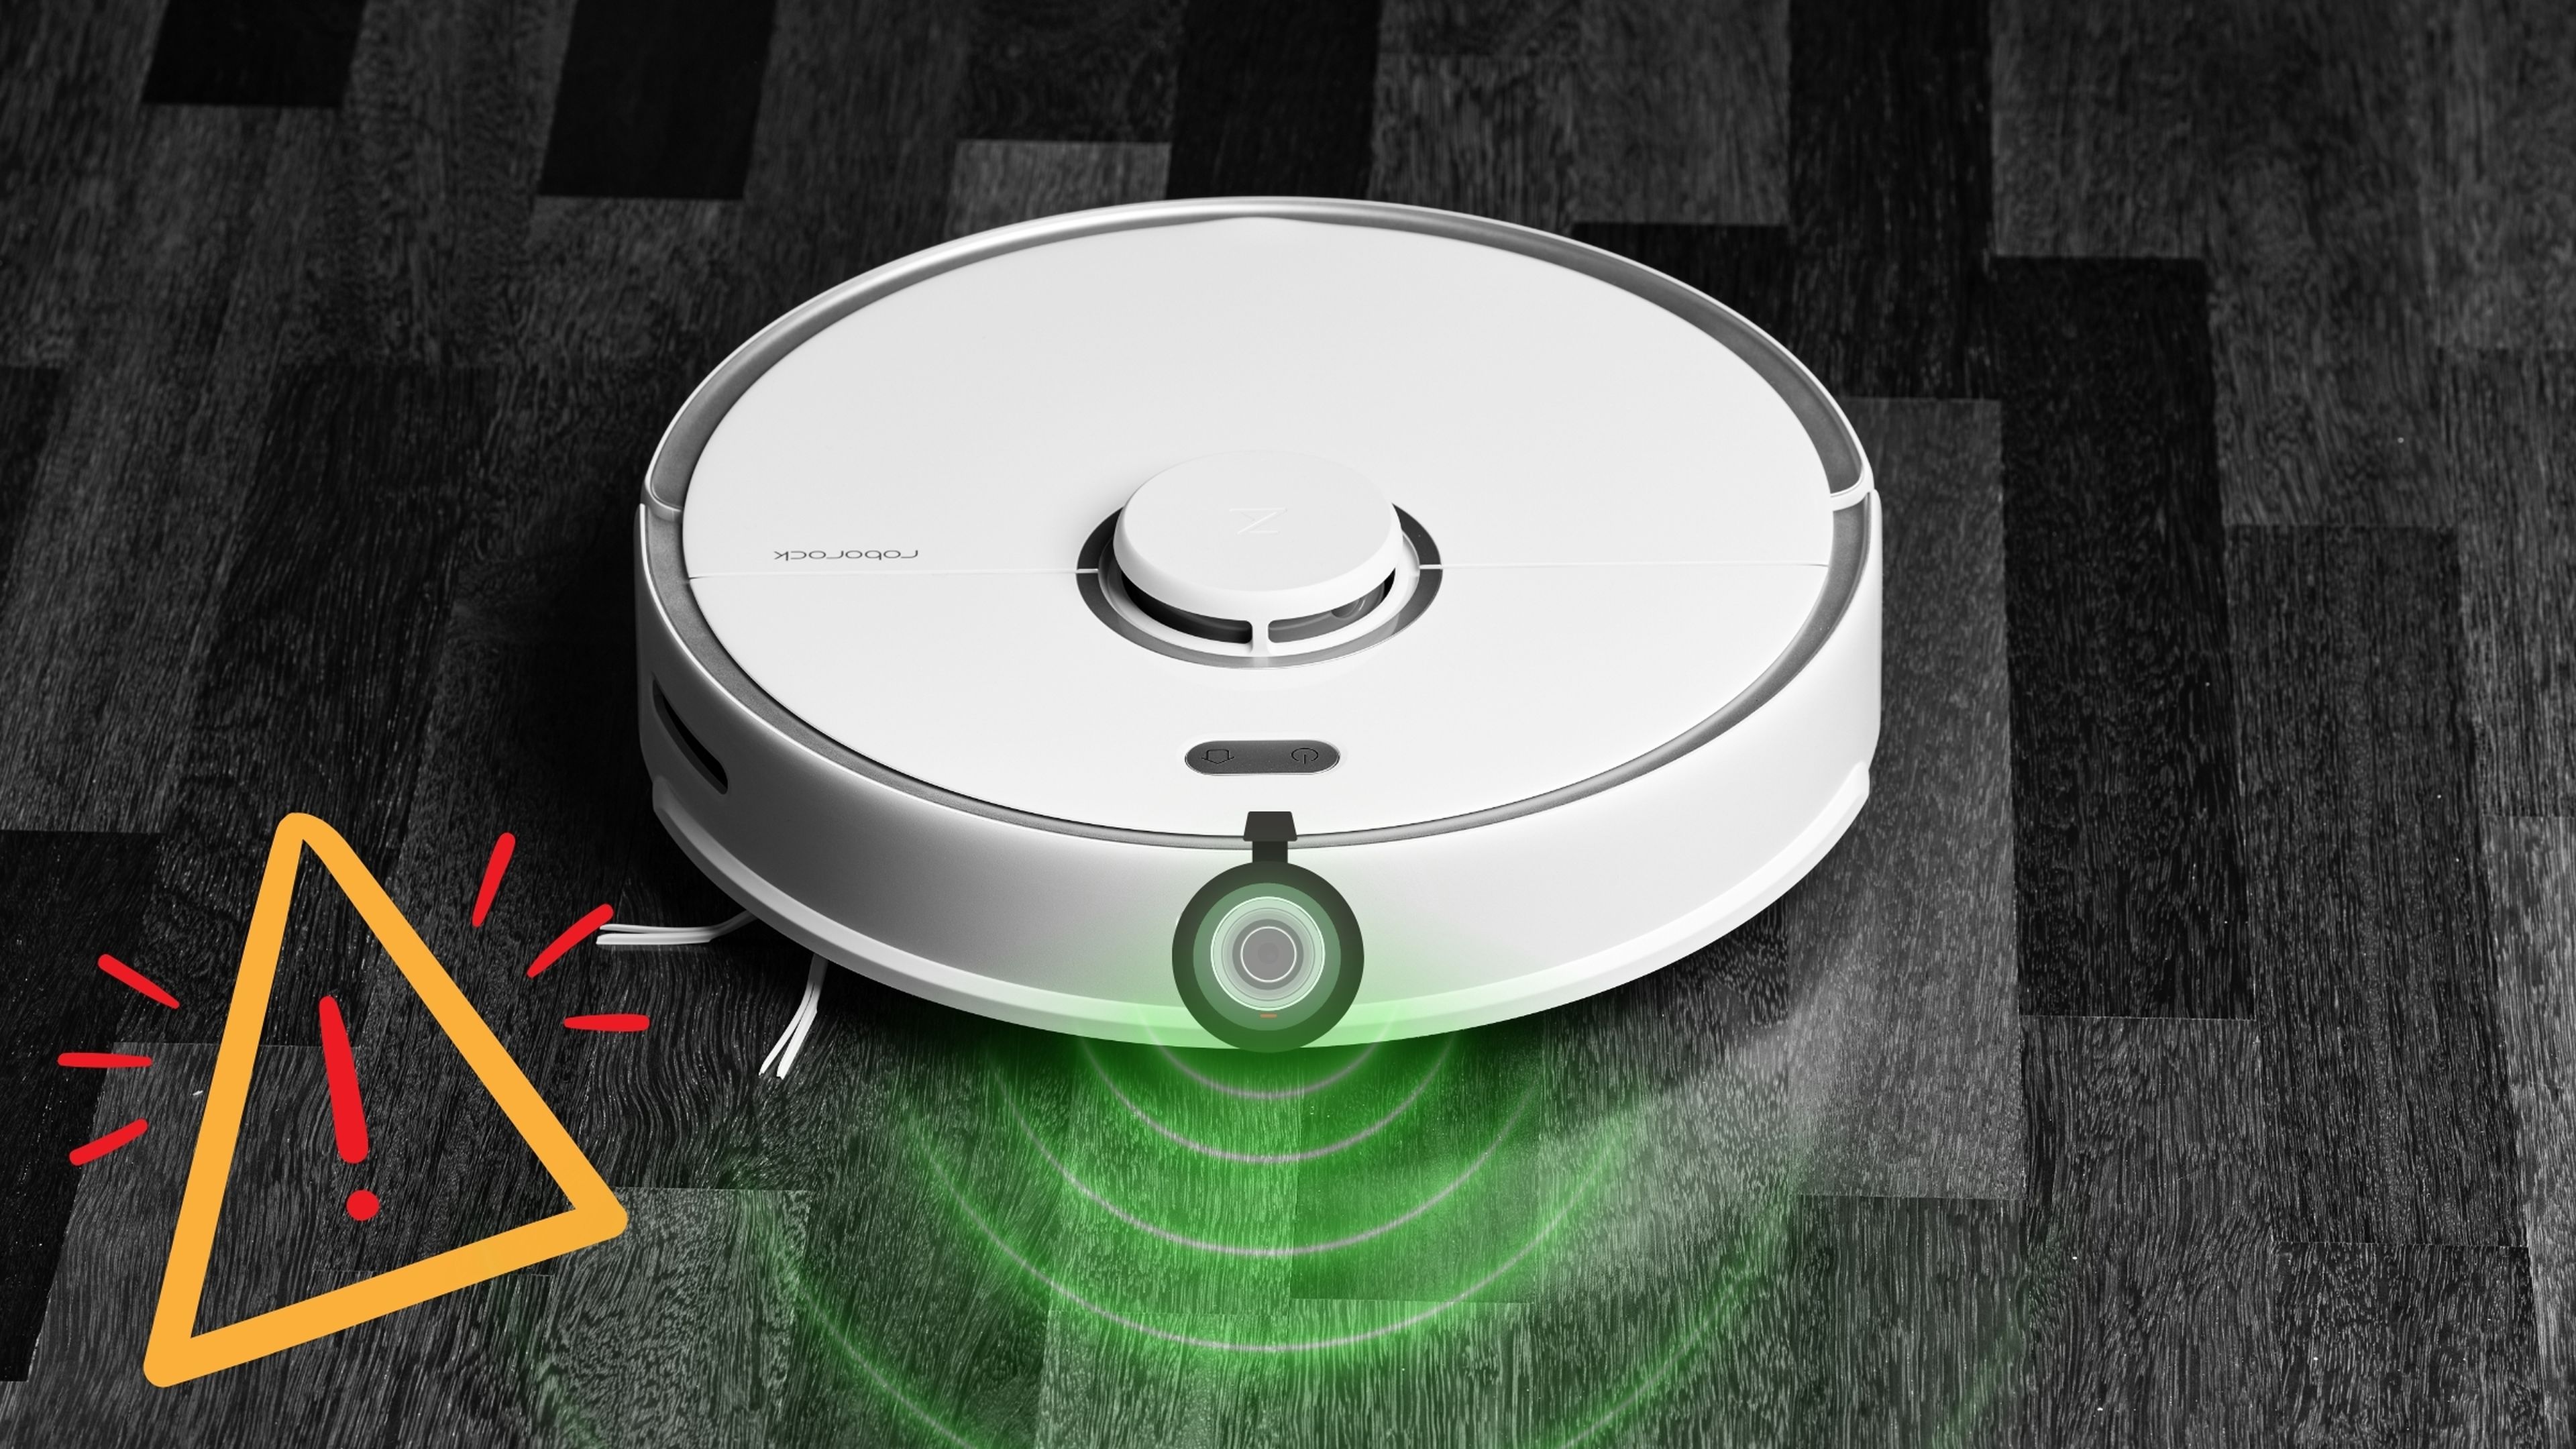 7 dispositivos inteligentes que funcionan como cámaras de seguridad ocultas para proteger tu hogar